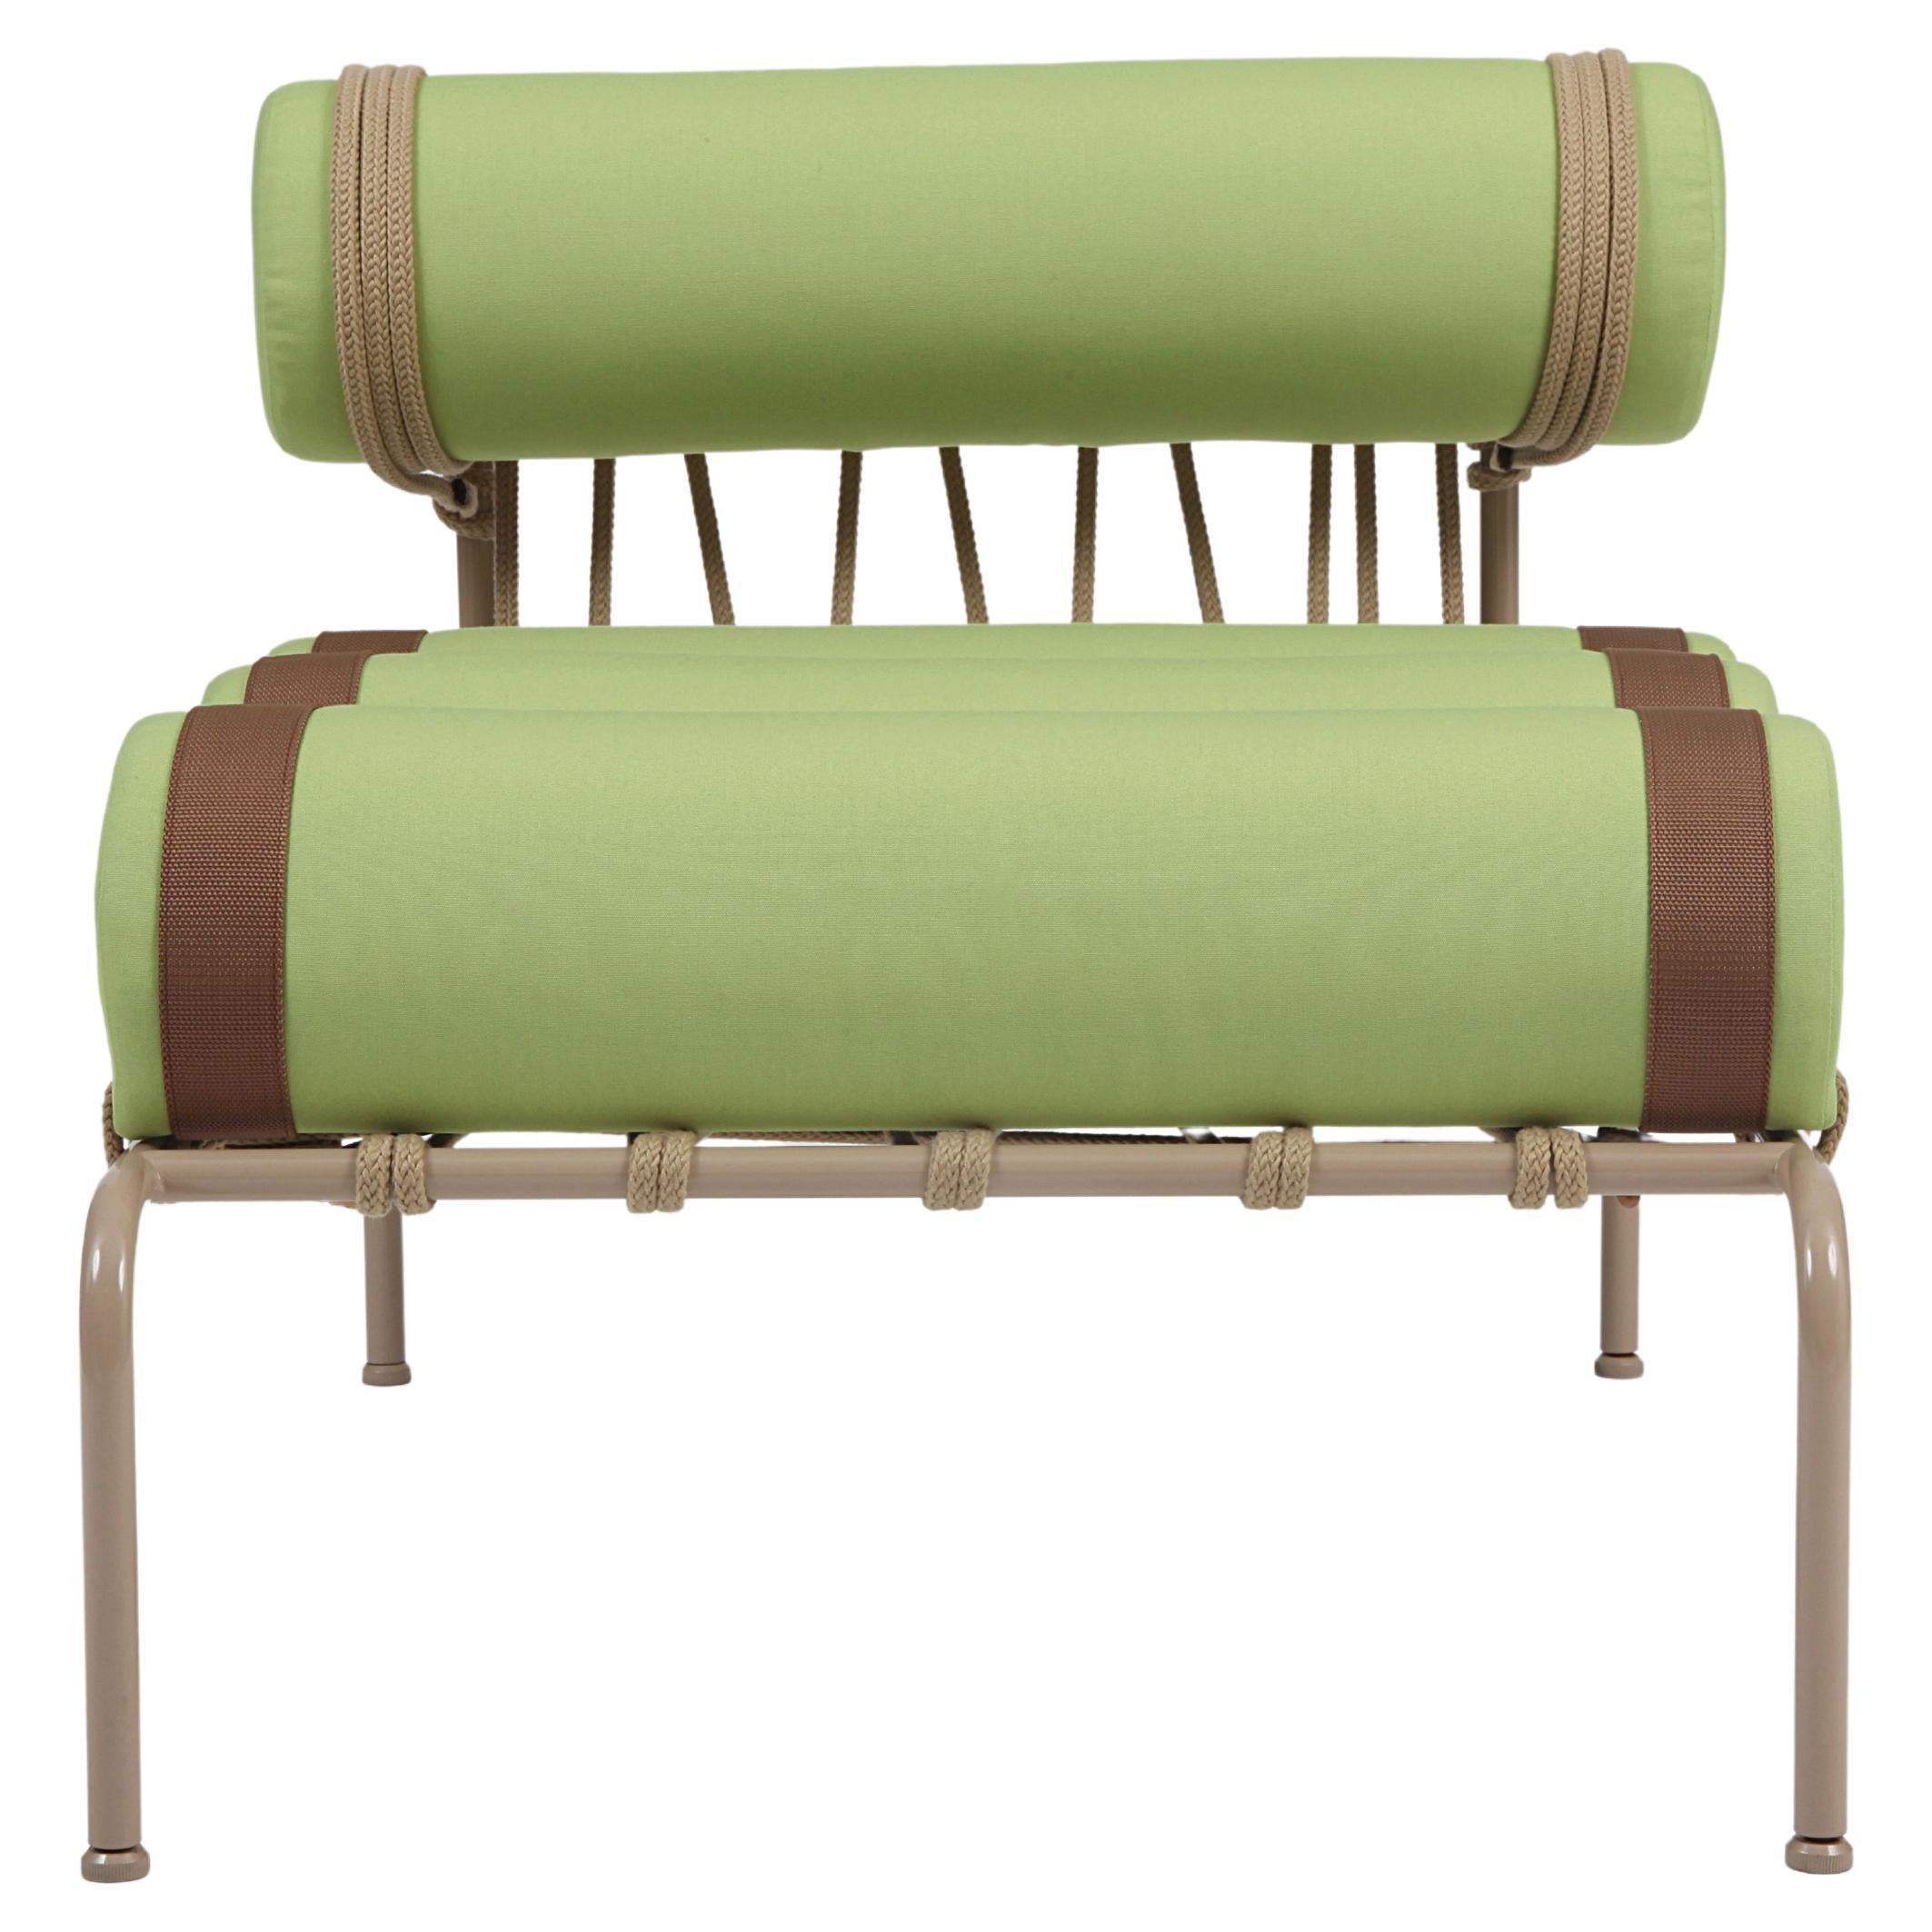 Verde Oasi Plain Kylíndo Outdoor Armchair by Dalmoto For Sale